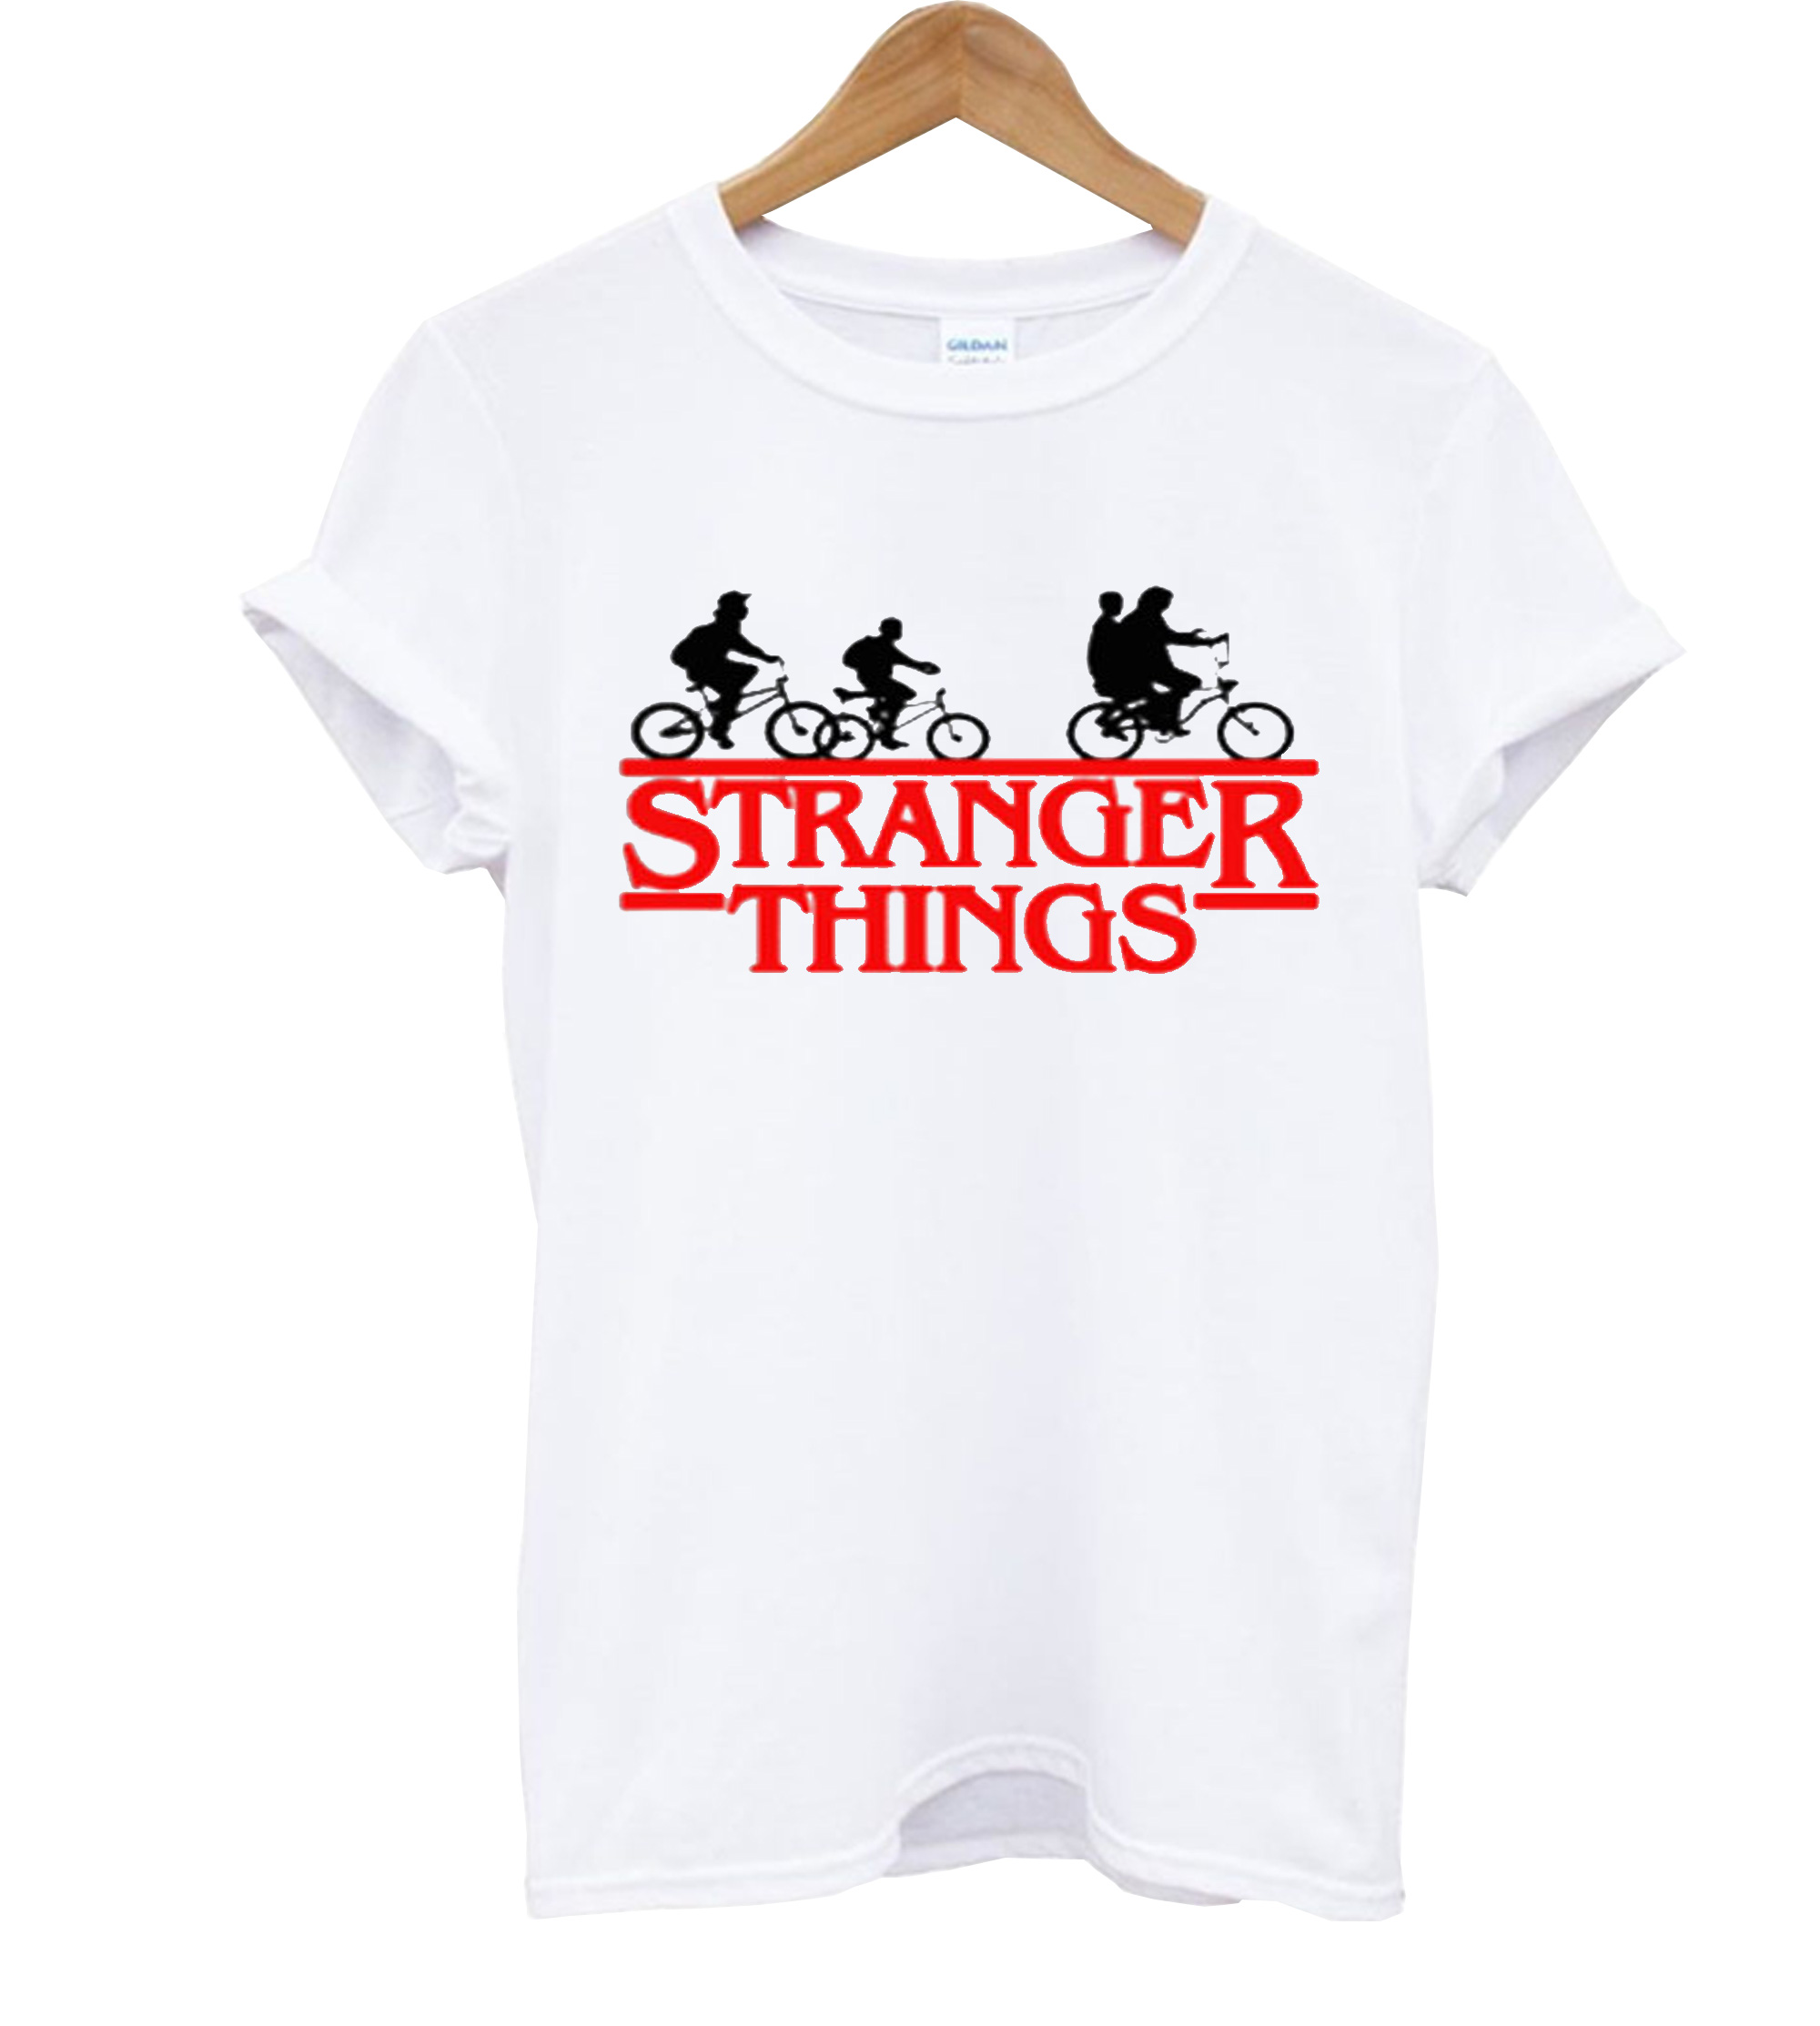 Stranger Things Purdue Merchandise T Shirt